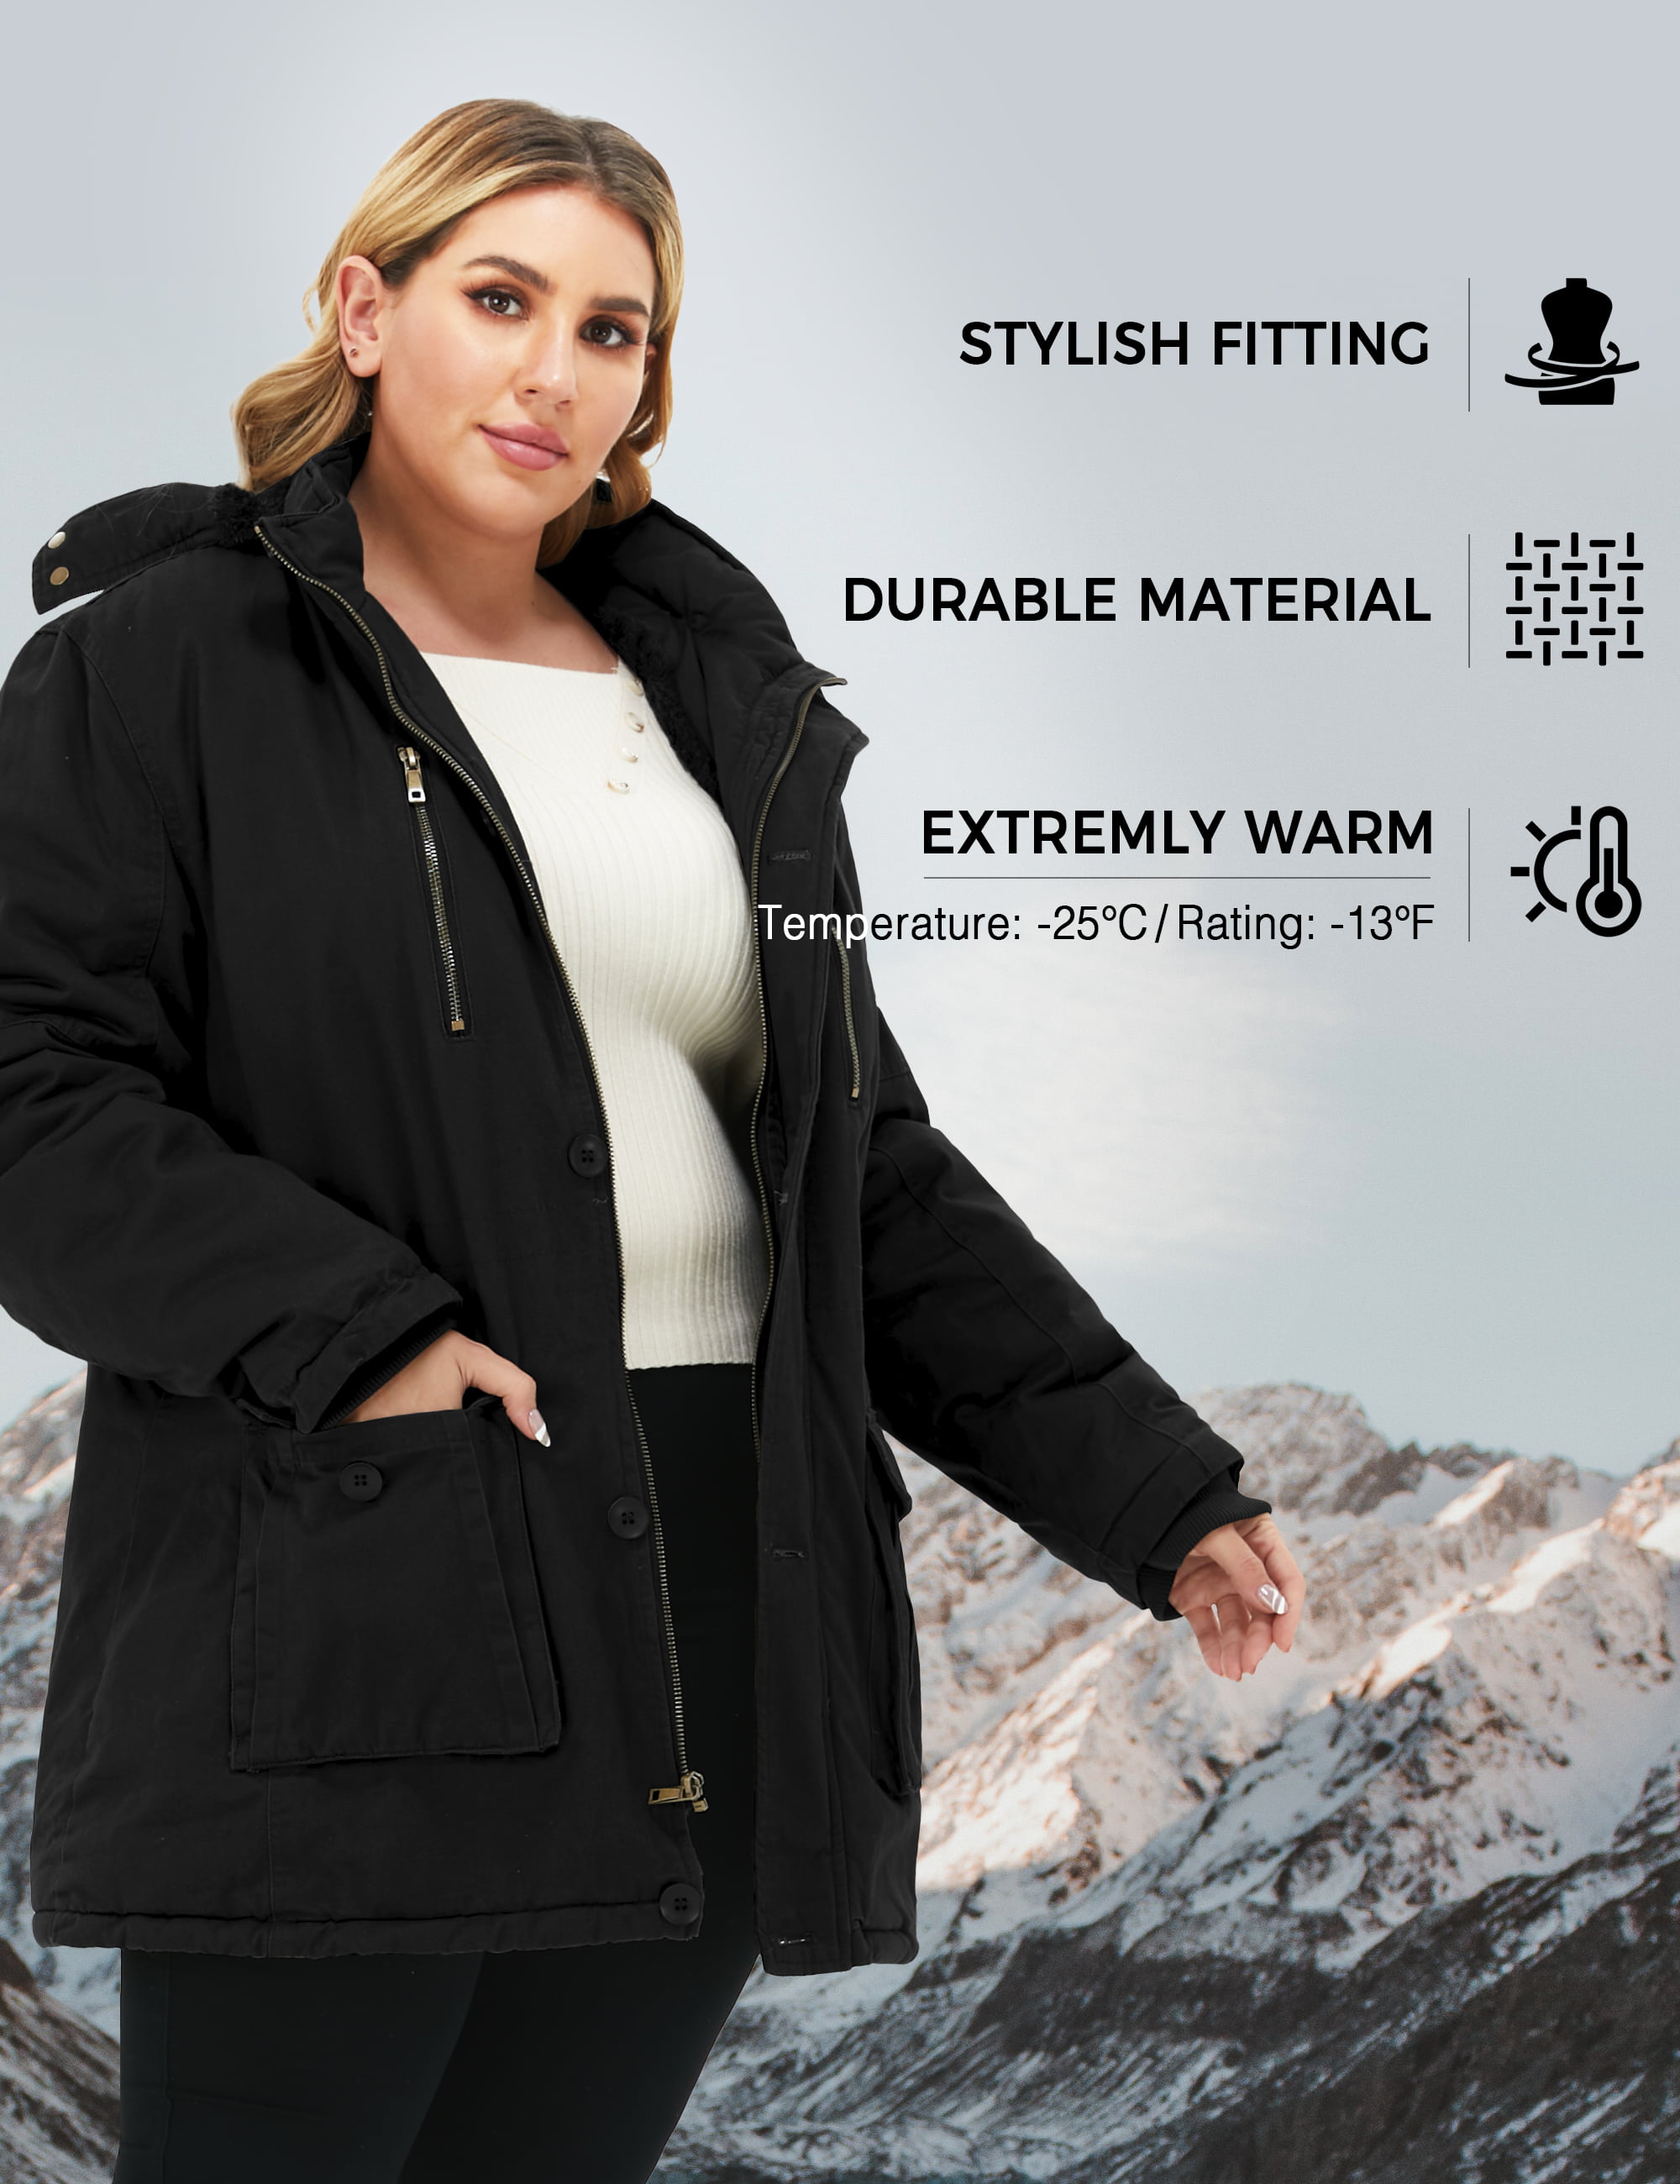 Antage mølle Nybegynder Soularge Women's Winter Plus Size Padded Fleece Parka Coat with Hood  (Black, 3X) - Walmart.com